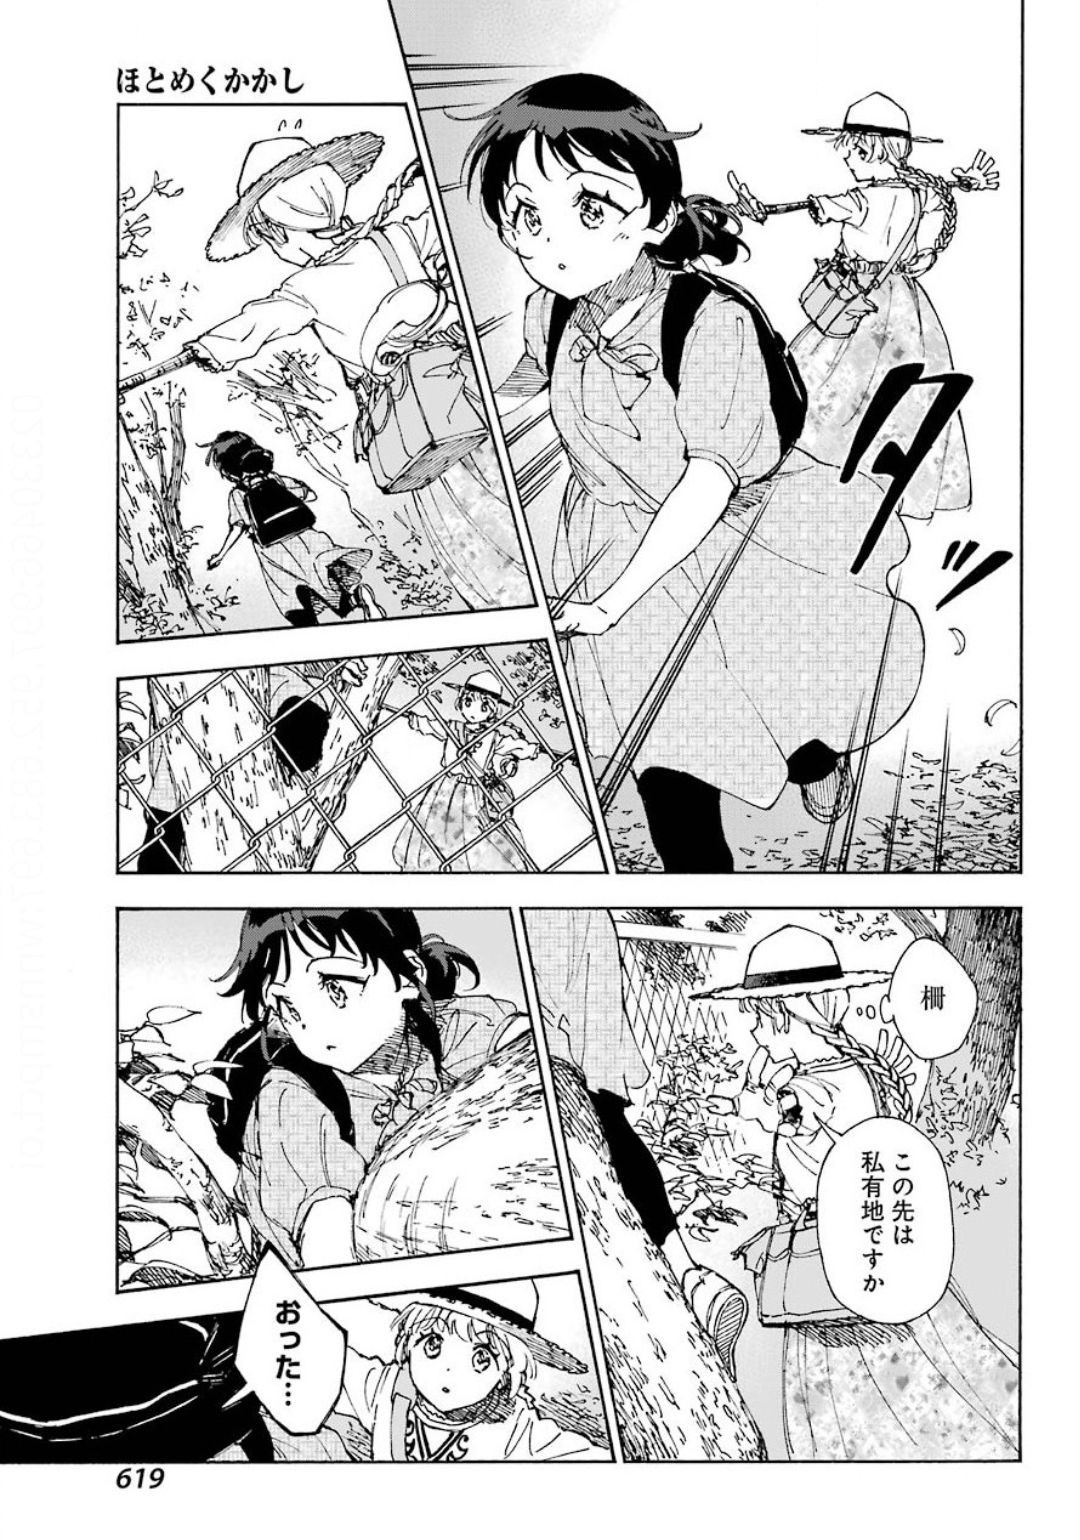 Hotomeku-kakashi - Chapter 06-1 - Page 15